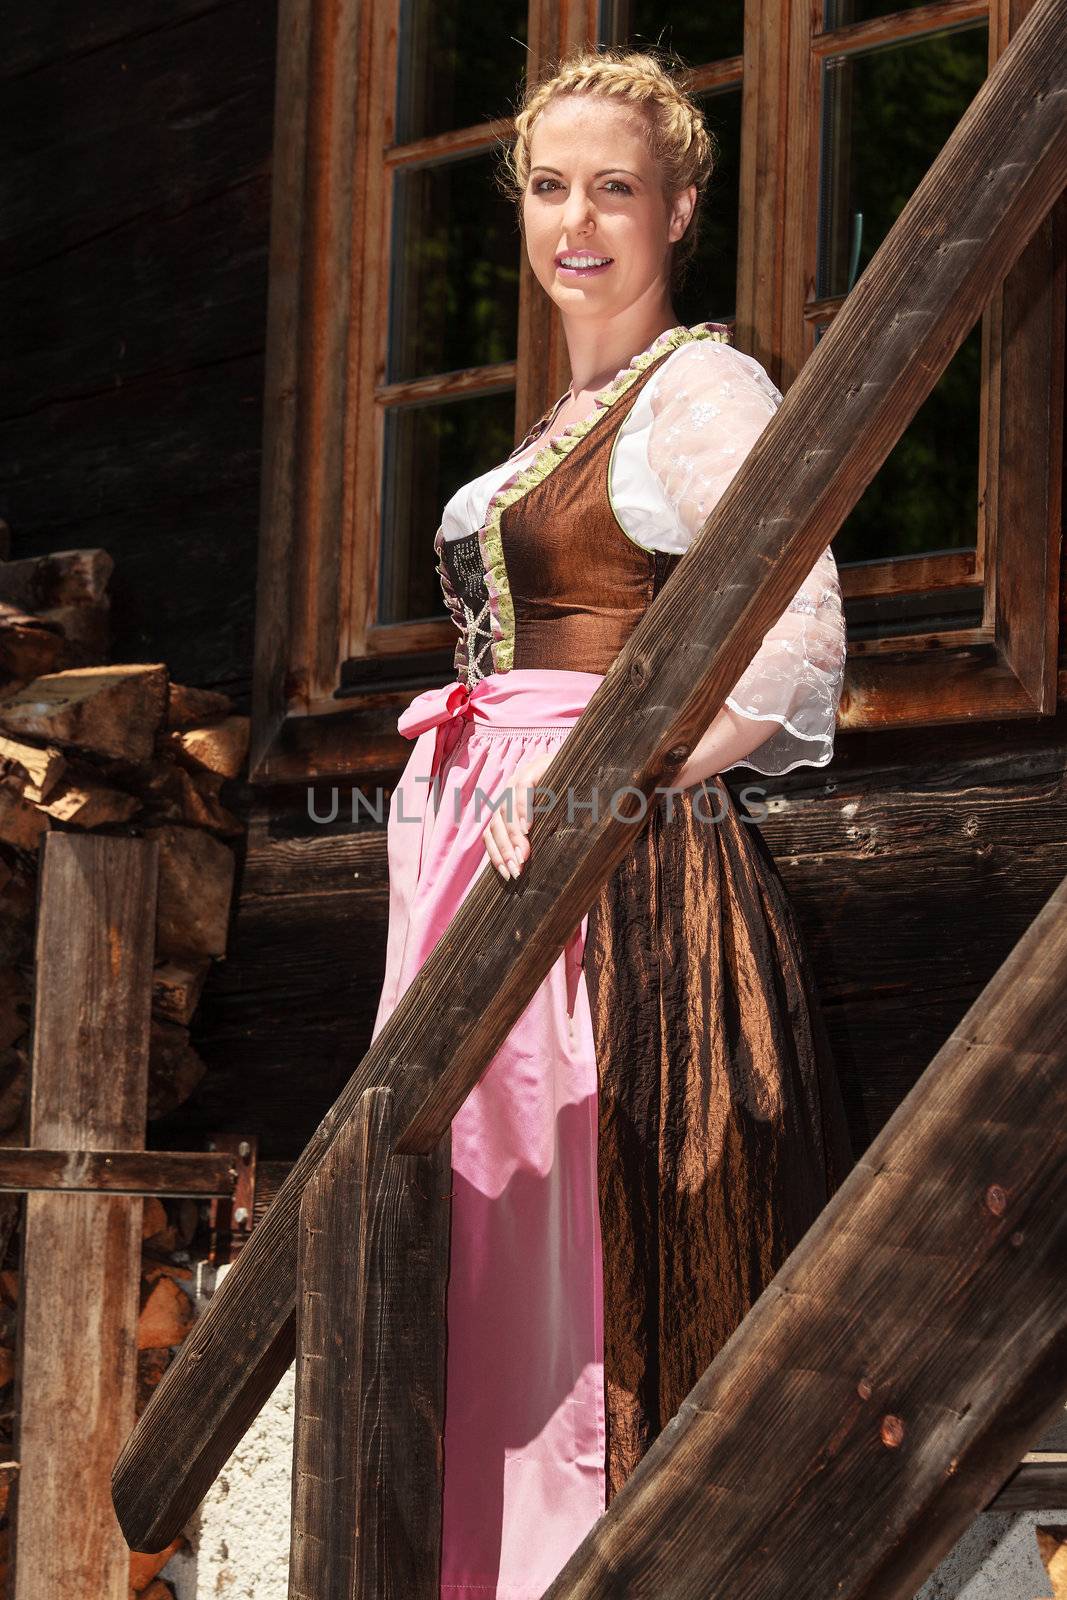 Bavarian girl in festive dress by STphotography